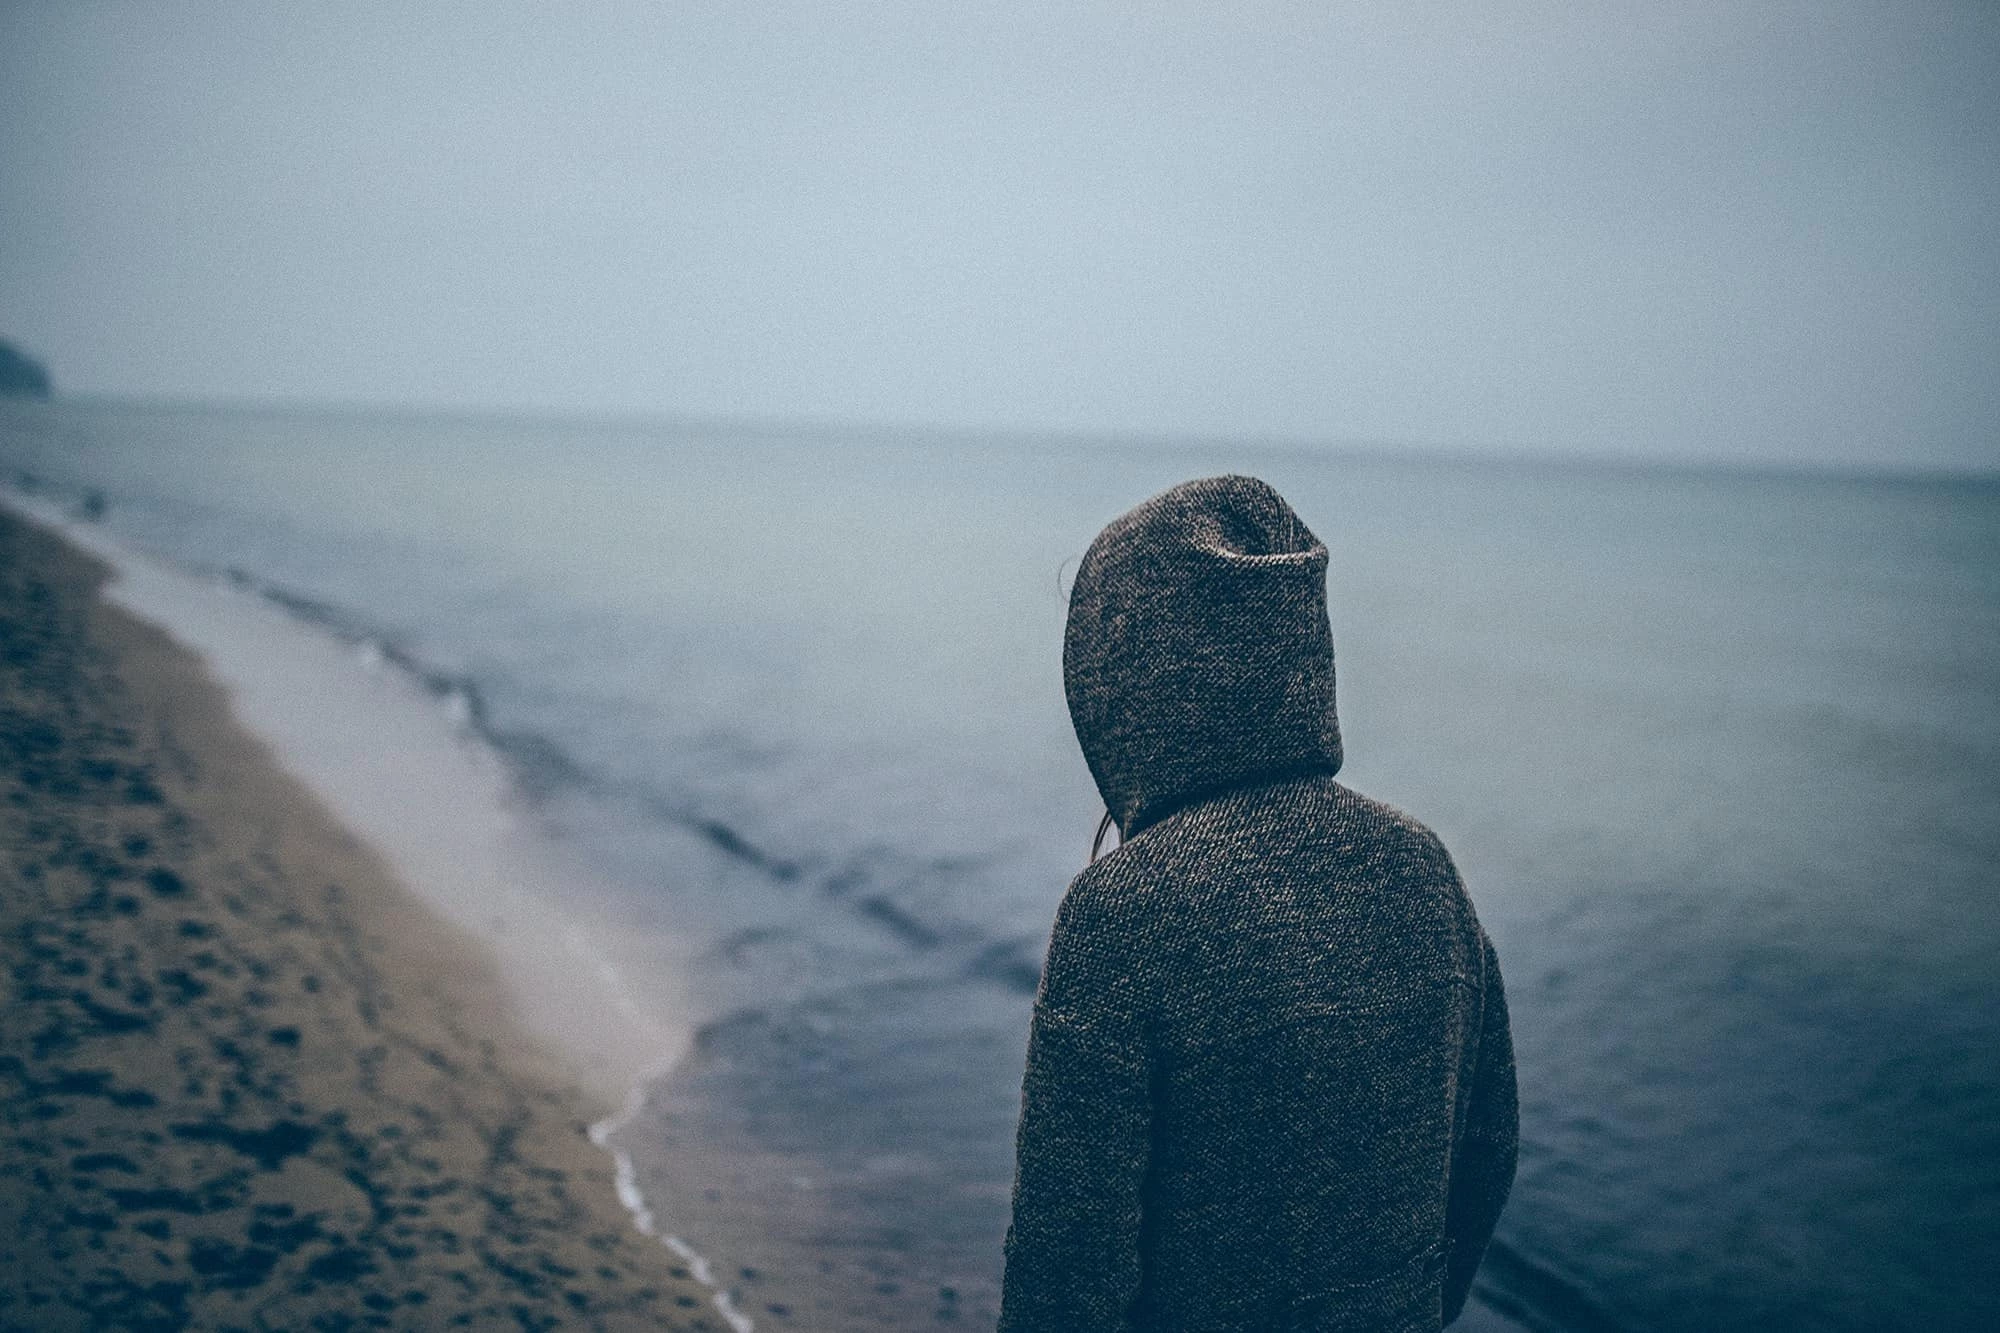 Person in hoody looking down a moody coastline